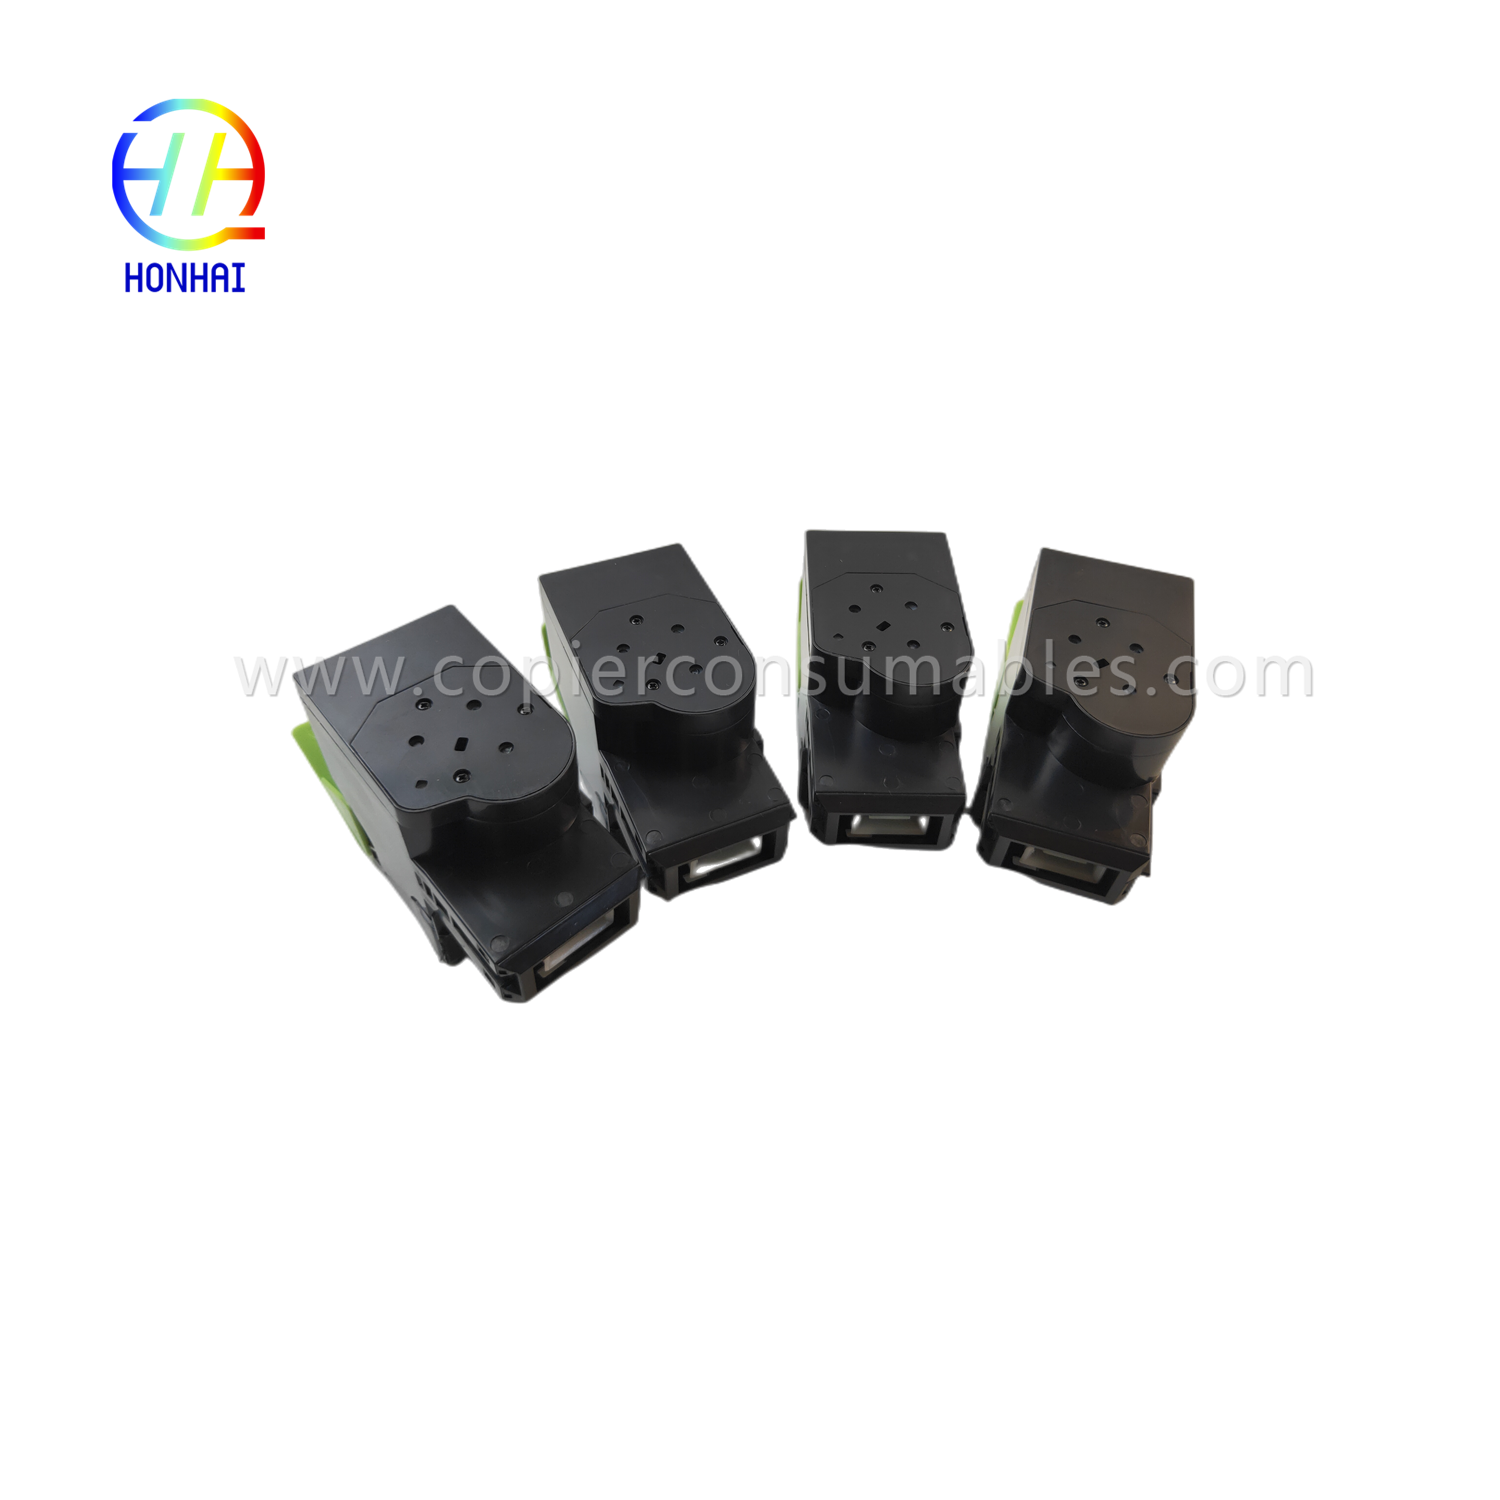 https://www.copierconsumables.com/toner-cartridgeset-for-epson-wf100-e-2661-e-2670-c13t216092-product/